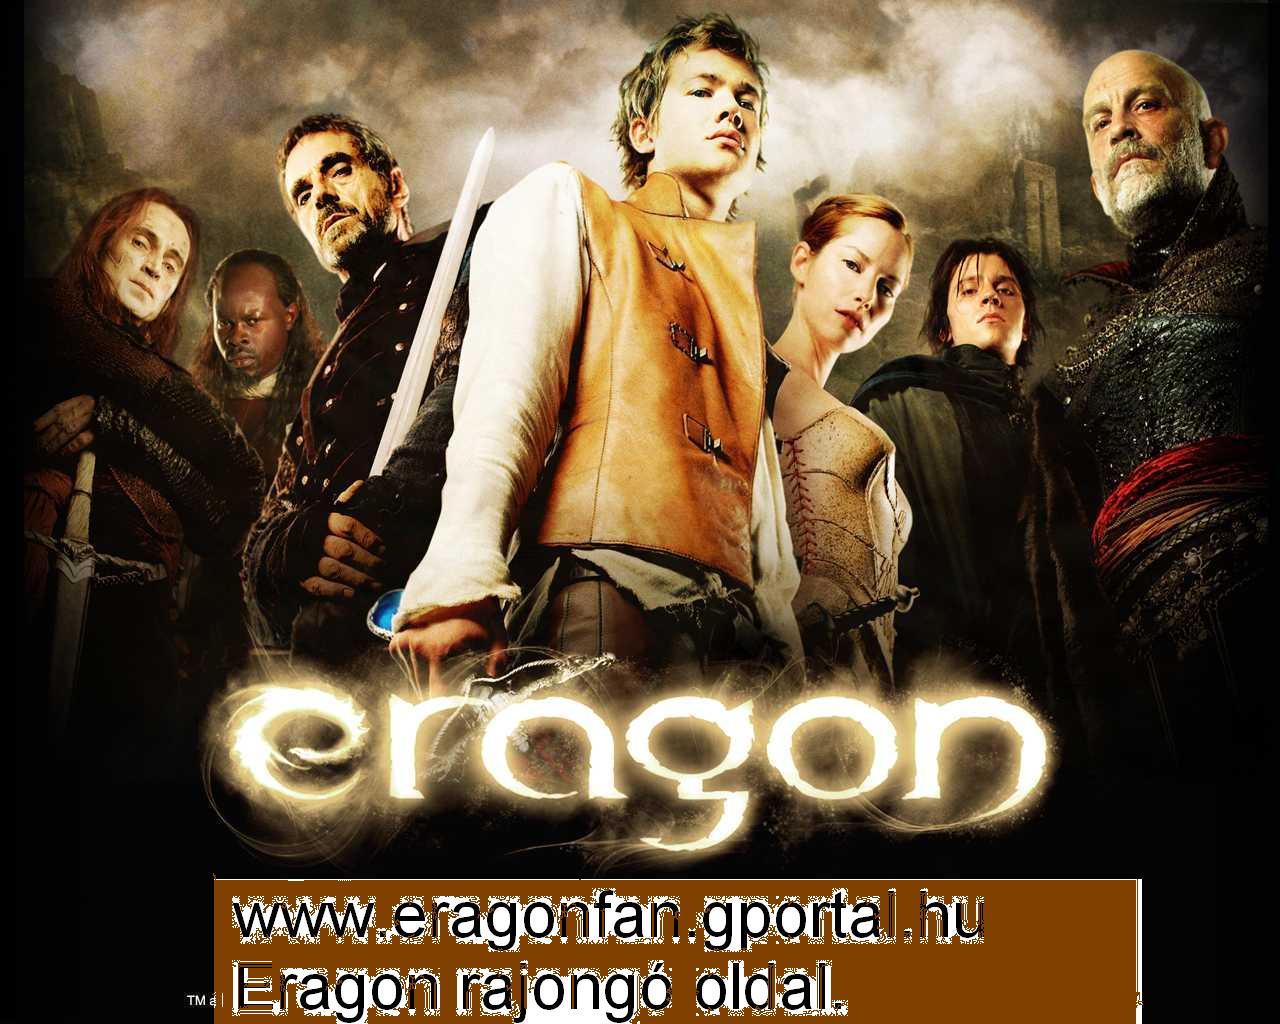 //Eragon rajongk oldala//